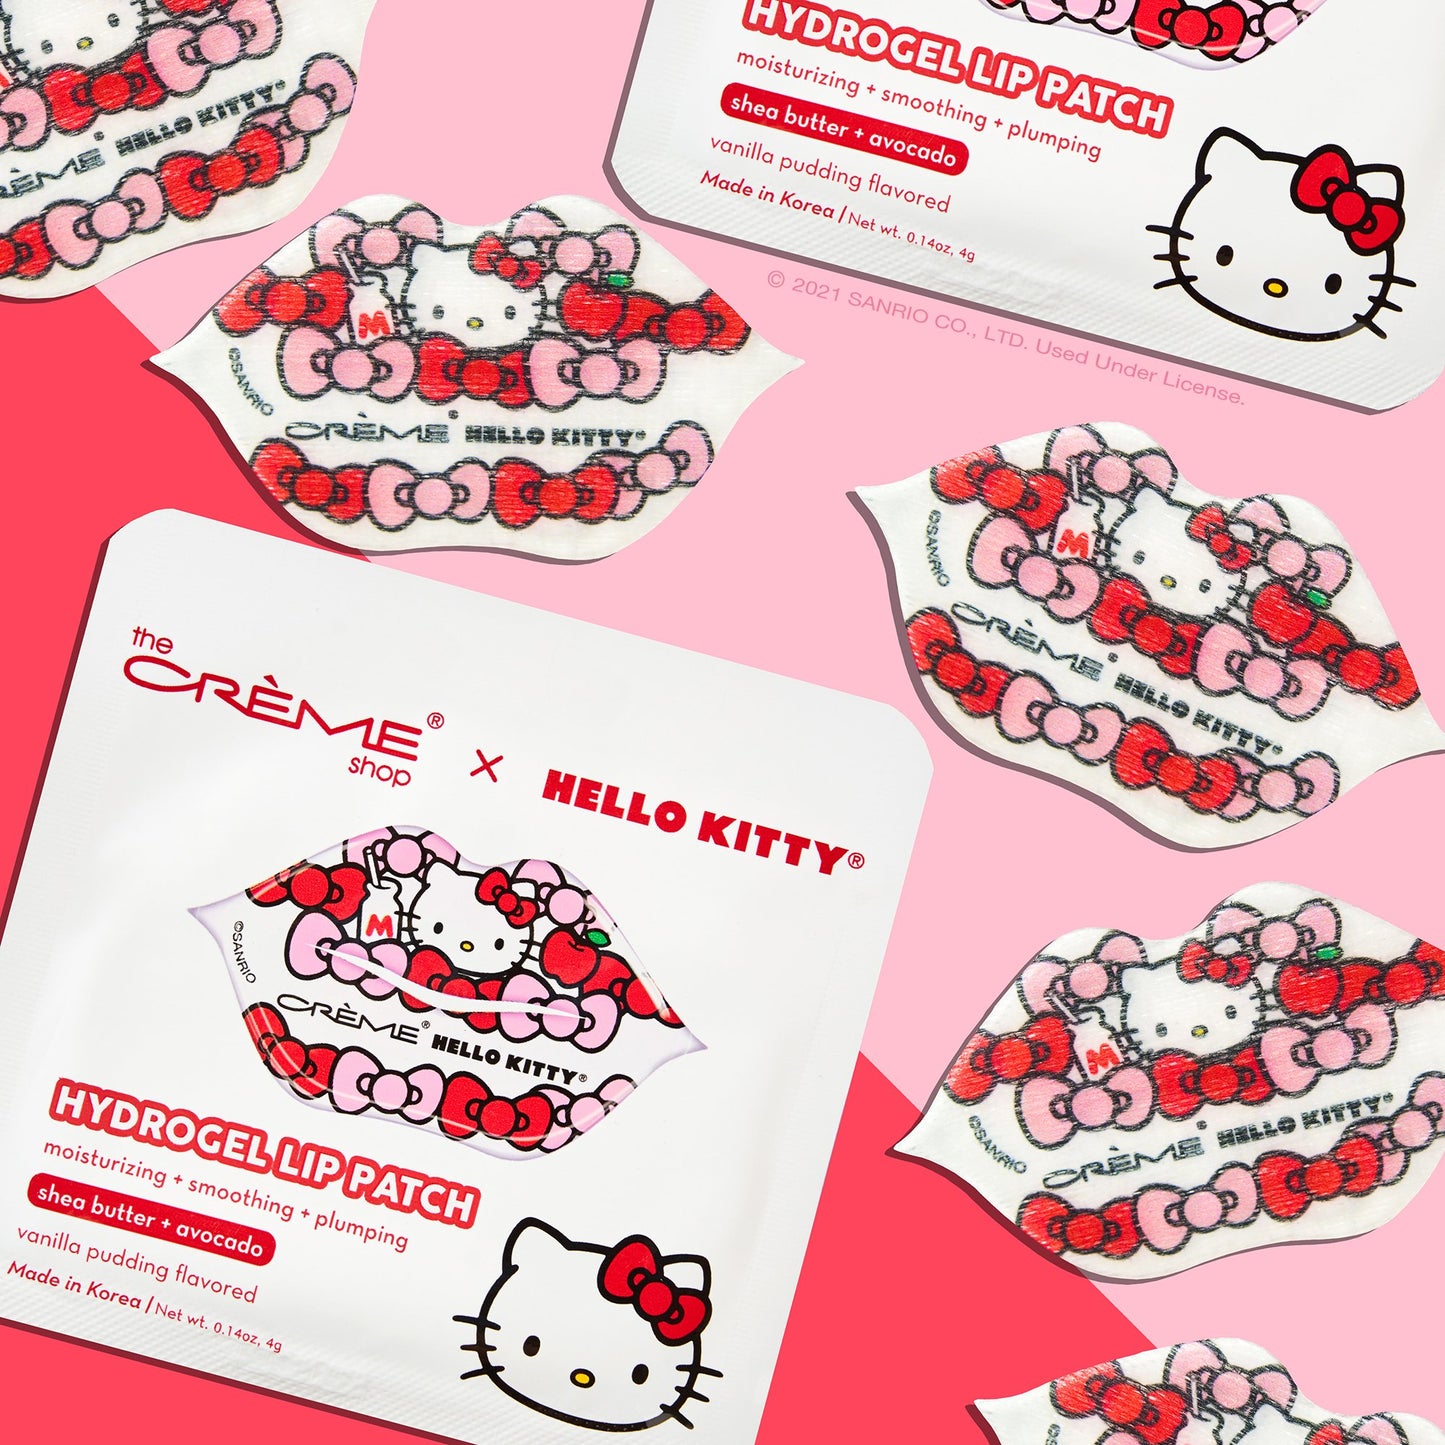 Hello Kitty Hydrogel Lip Patch | Vanilla Pudding Flavored Lip Patches The Crème Shop x Sanrio 